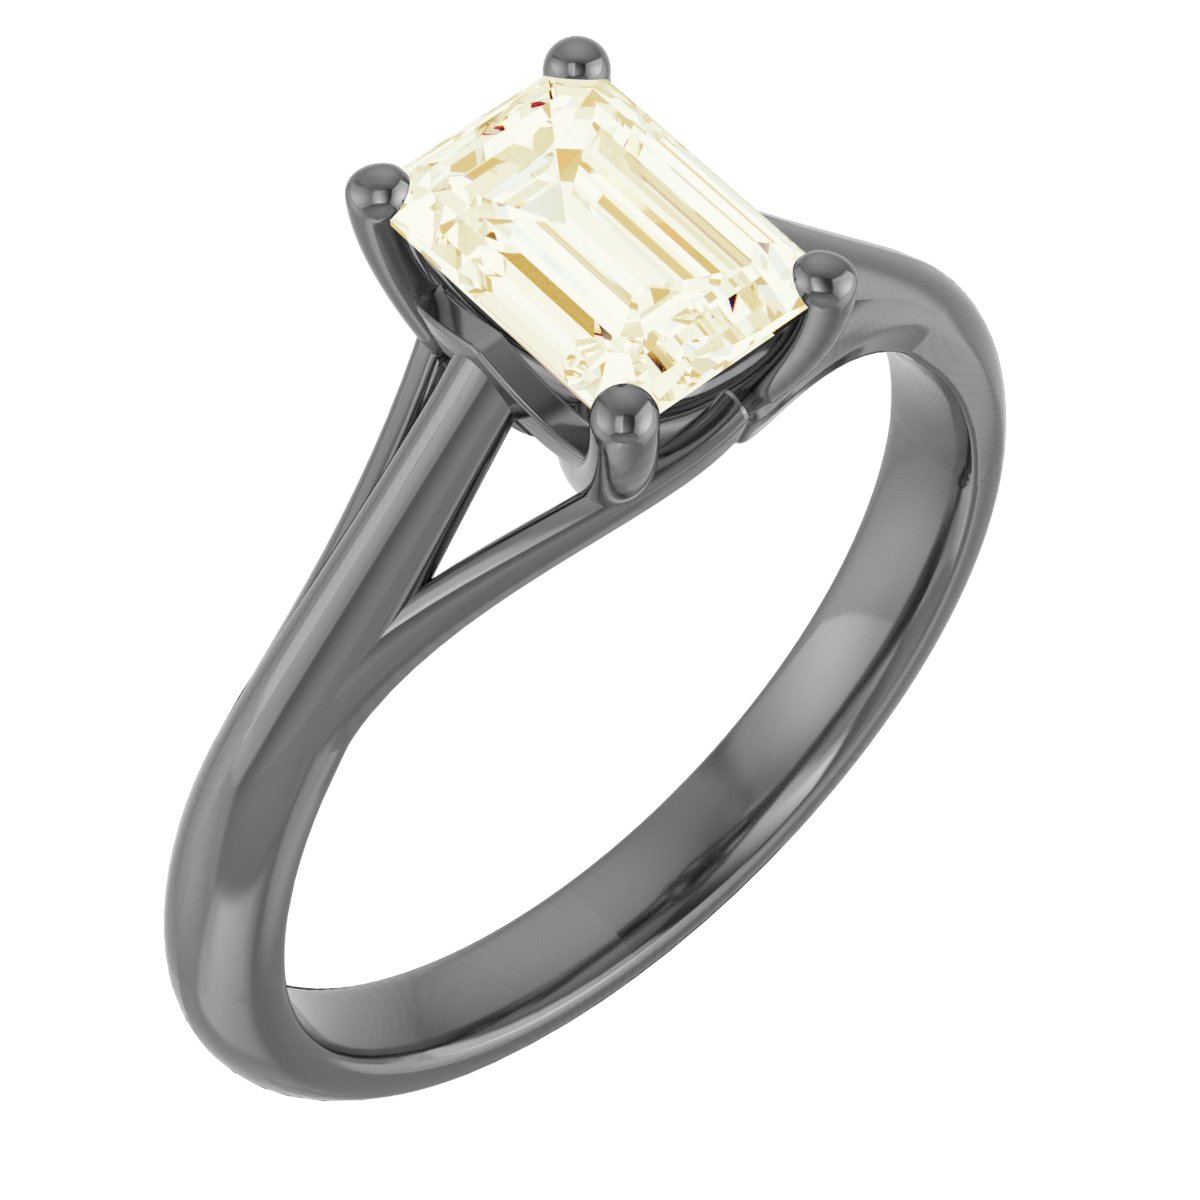 10K Gold 7x5 mm 1 carat Emerald Cut Lab Grown Diamond Solitaire Engagement Ring 122047187